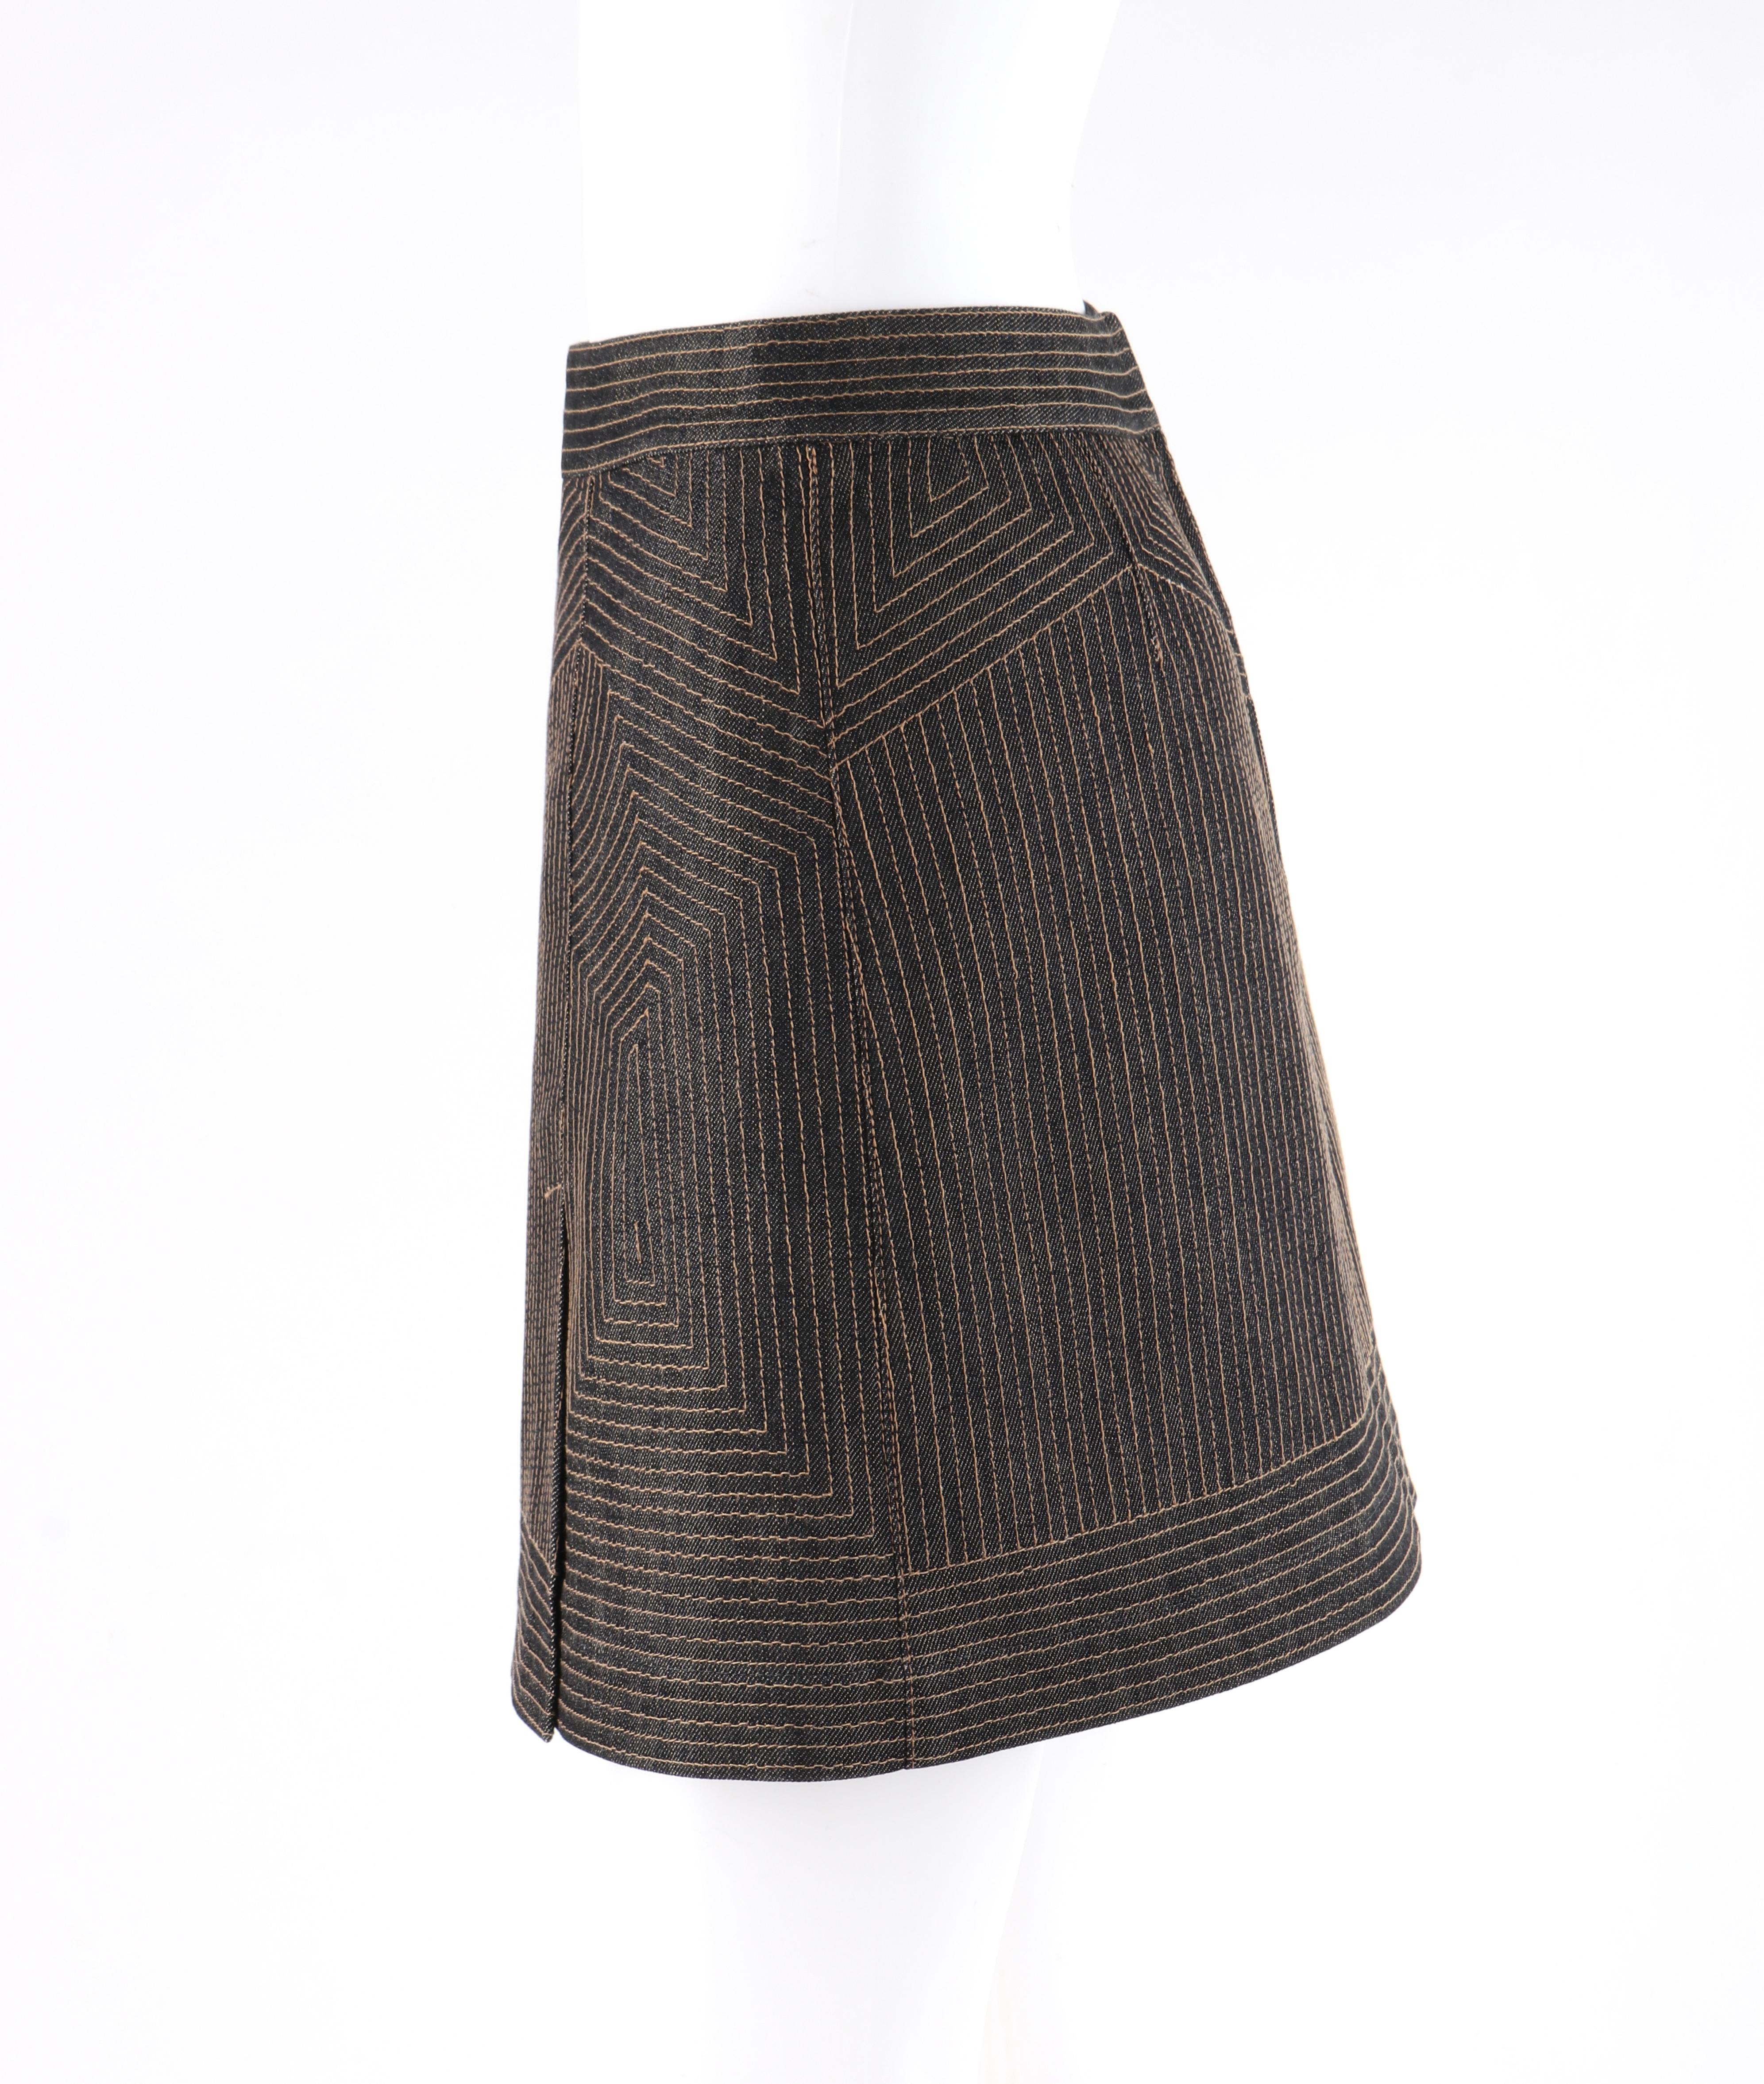 ALEXANDER McQUEEN c.2008 Black Denim Patterned Top Stitched Mini Skirt ...